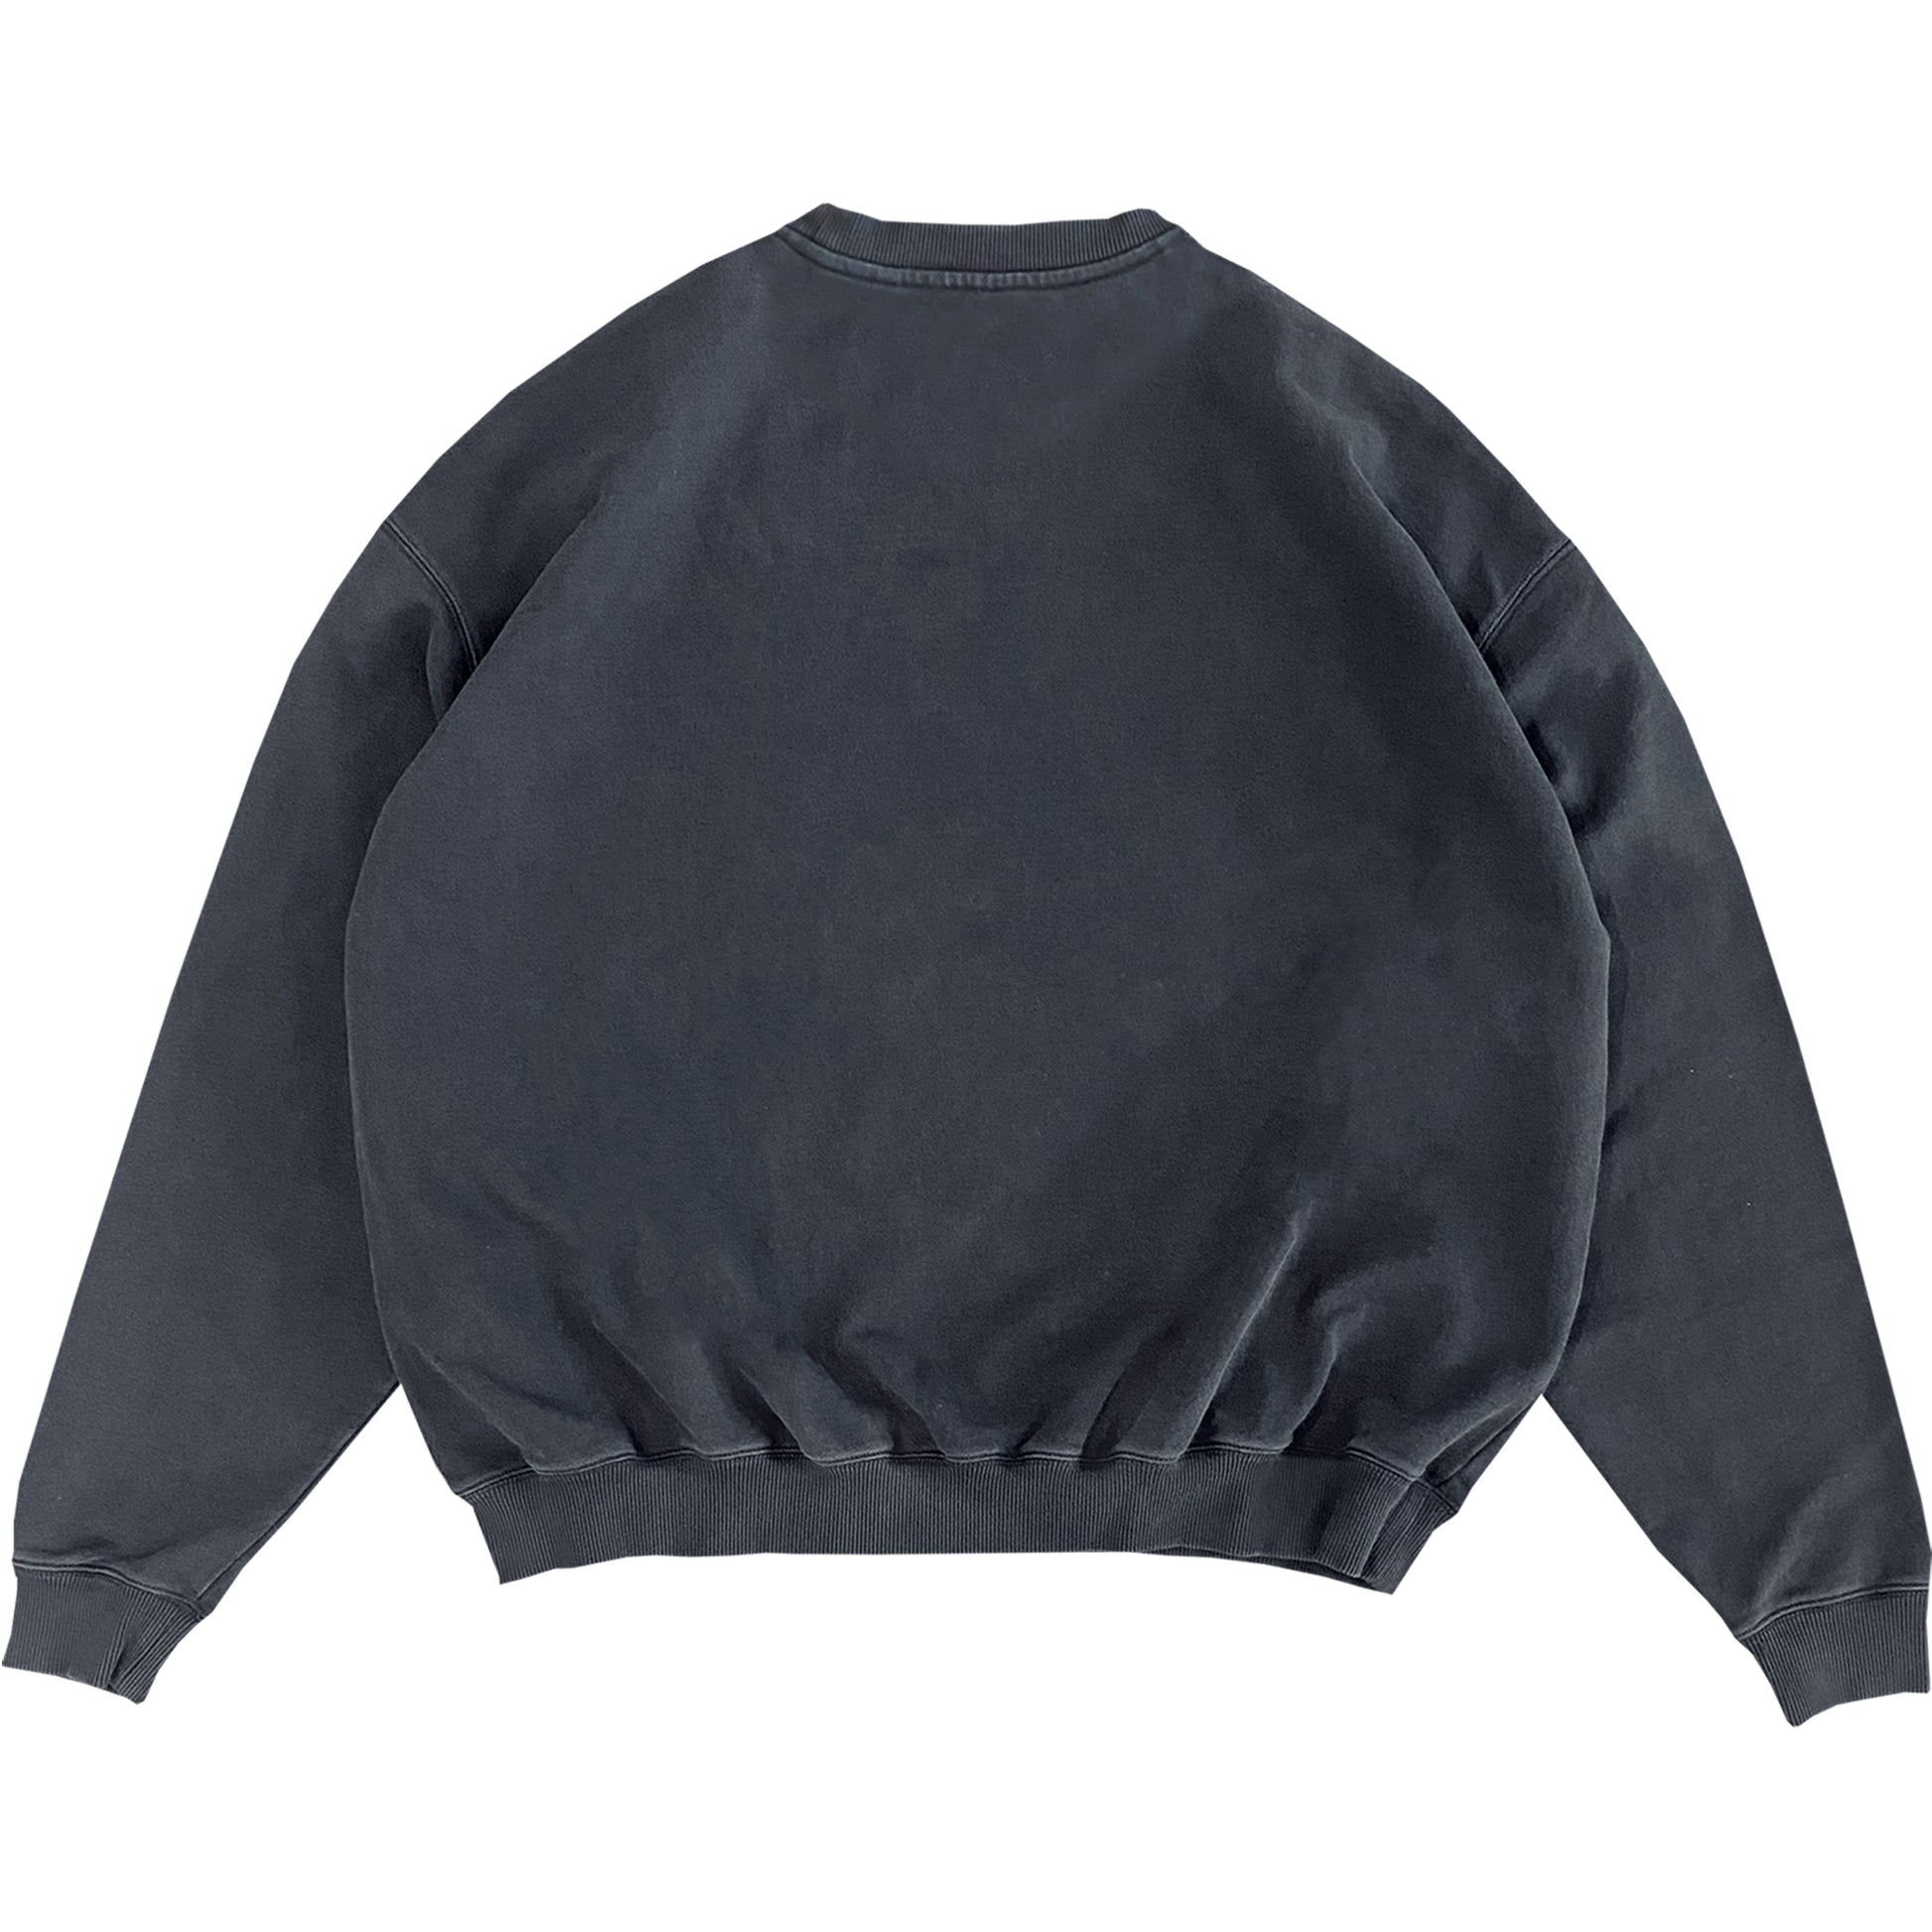 Vintage black logo sweater - Triple Gold